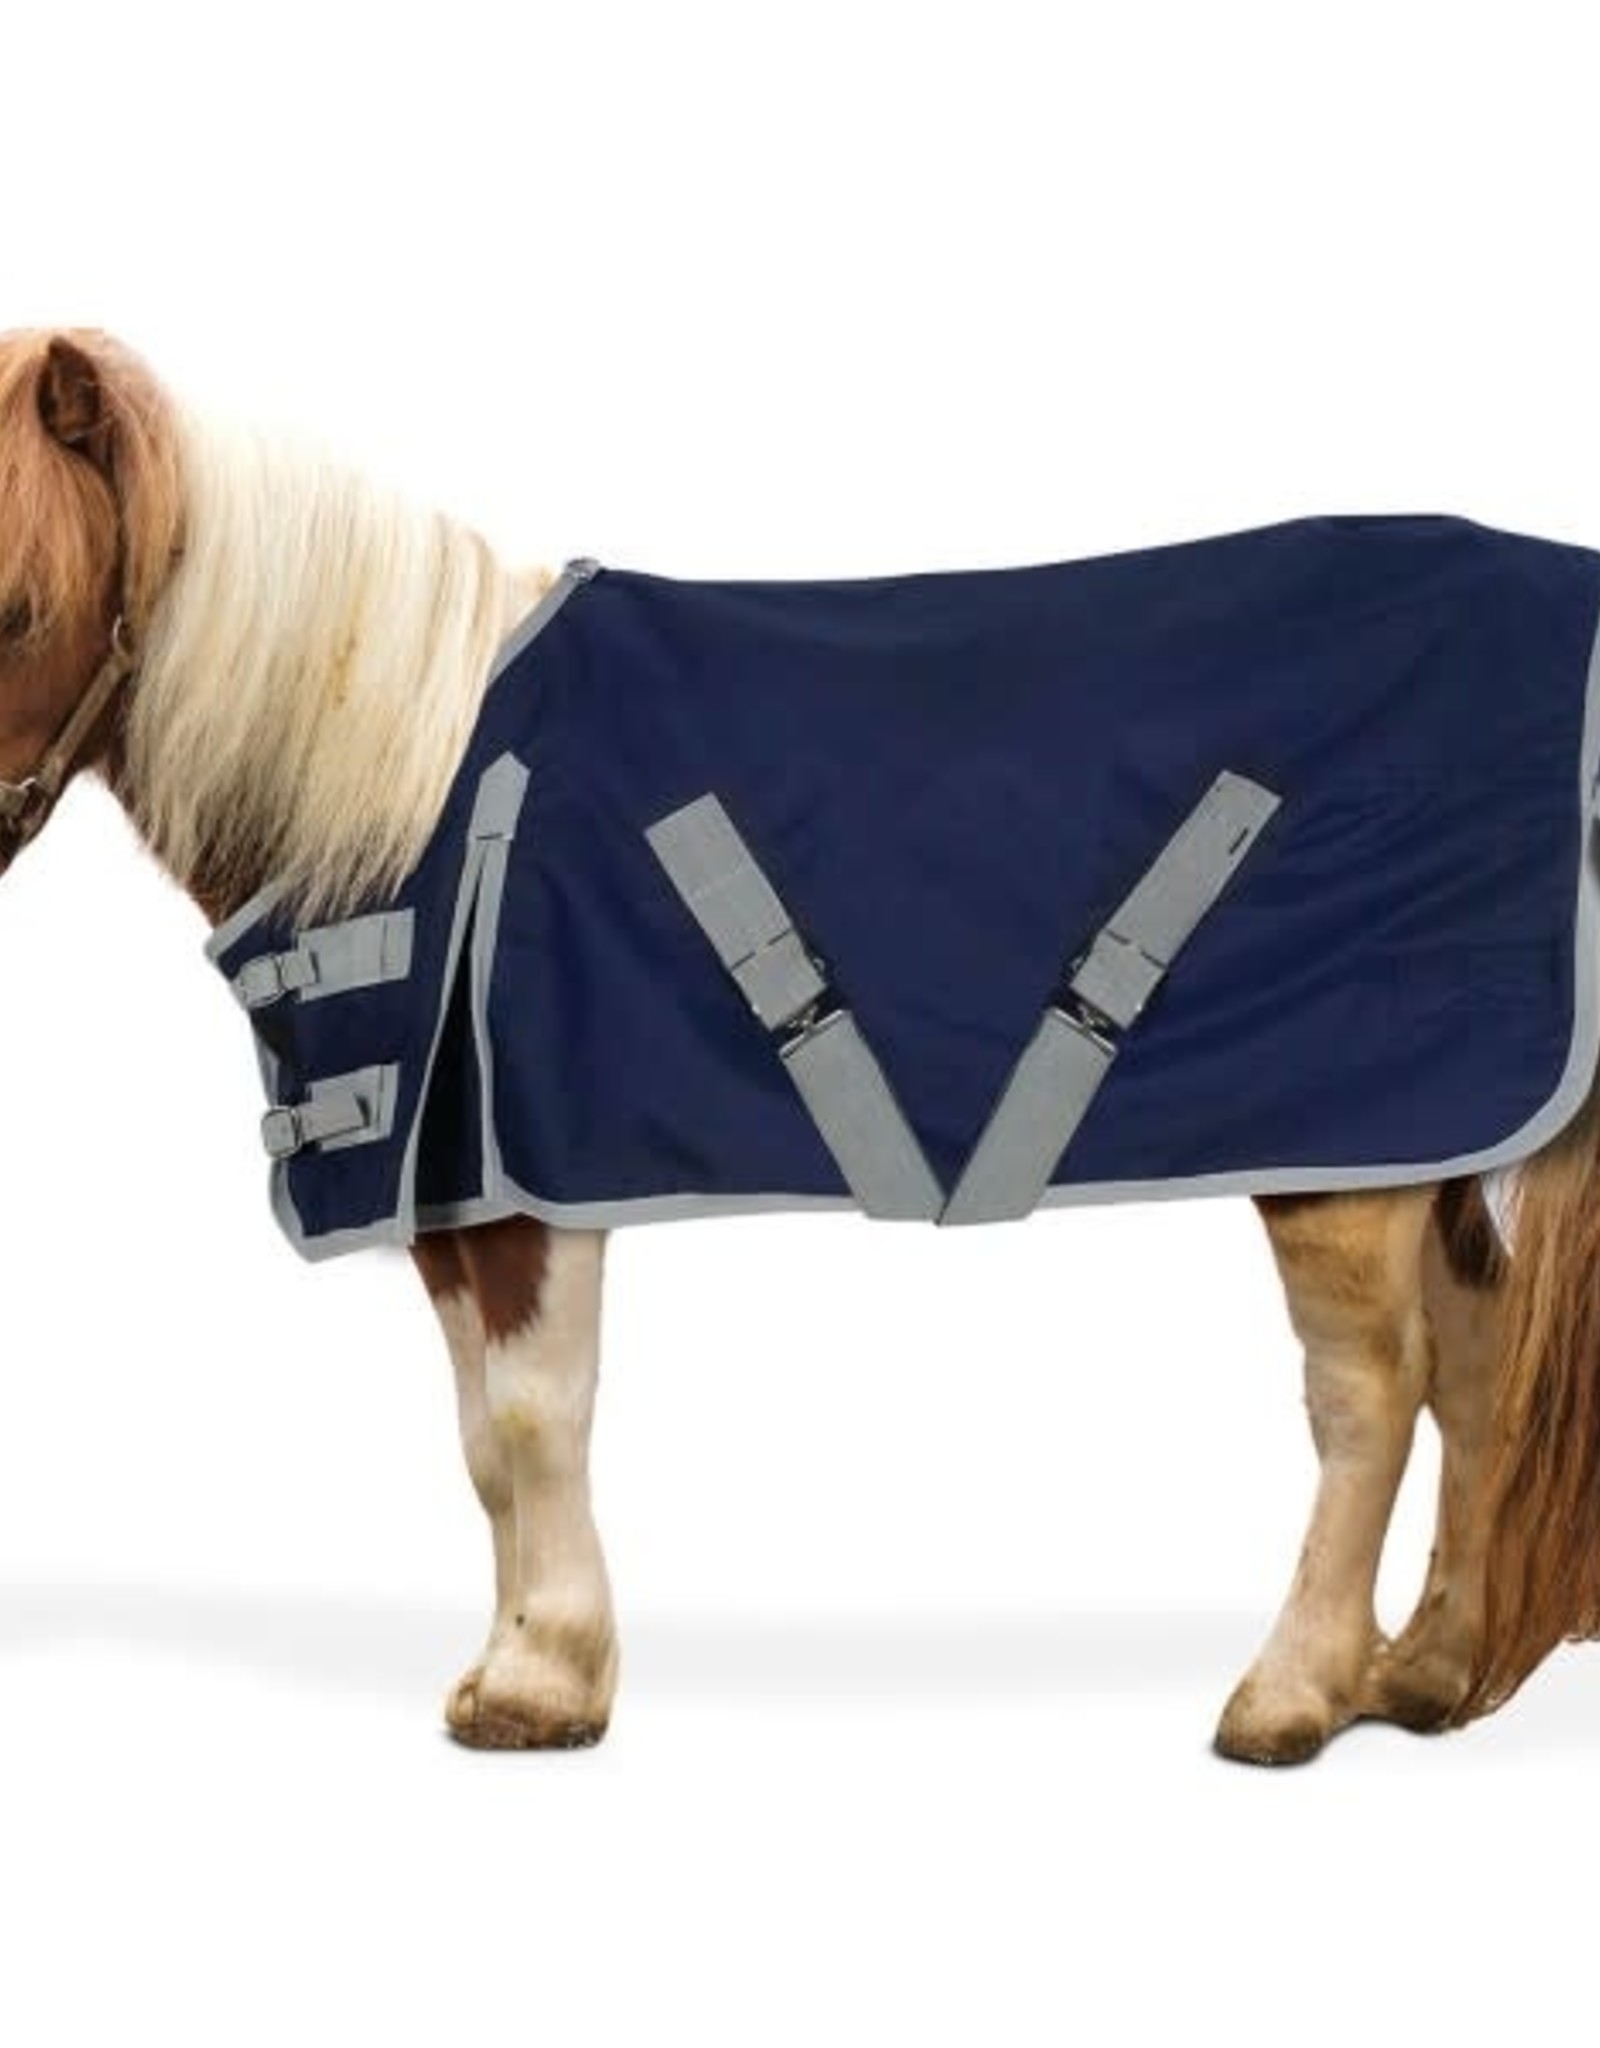 Ovation Centaur® 1200D Mini Horse Turnout Blanket- 200g